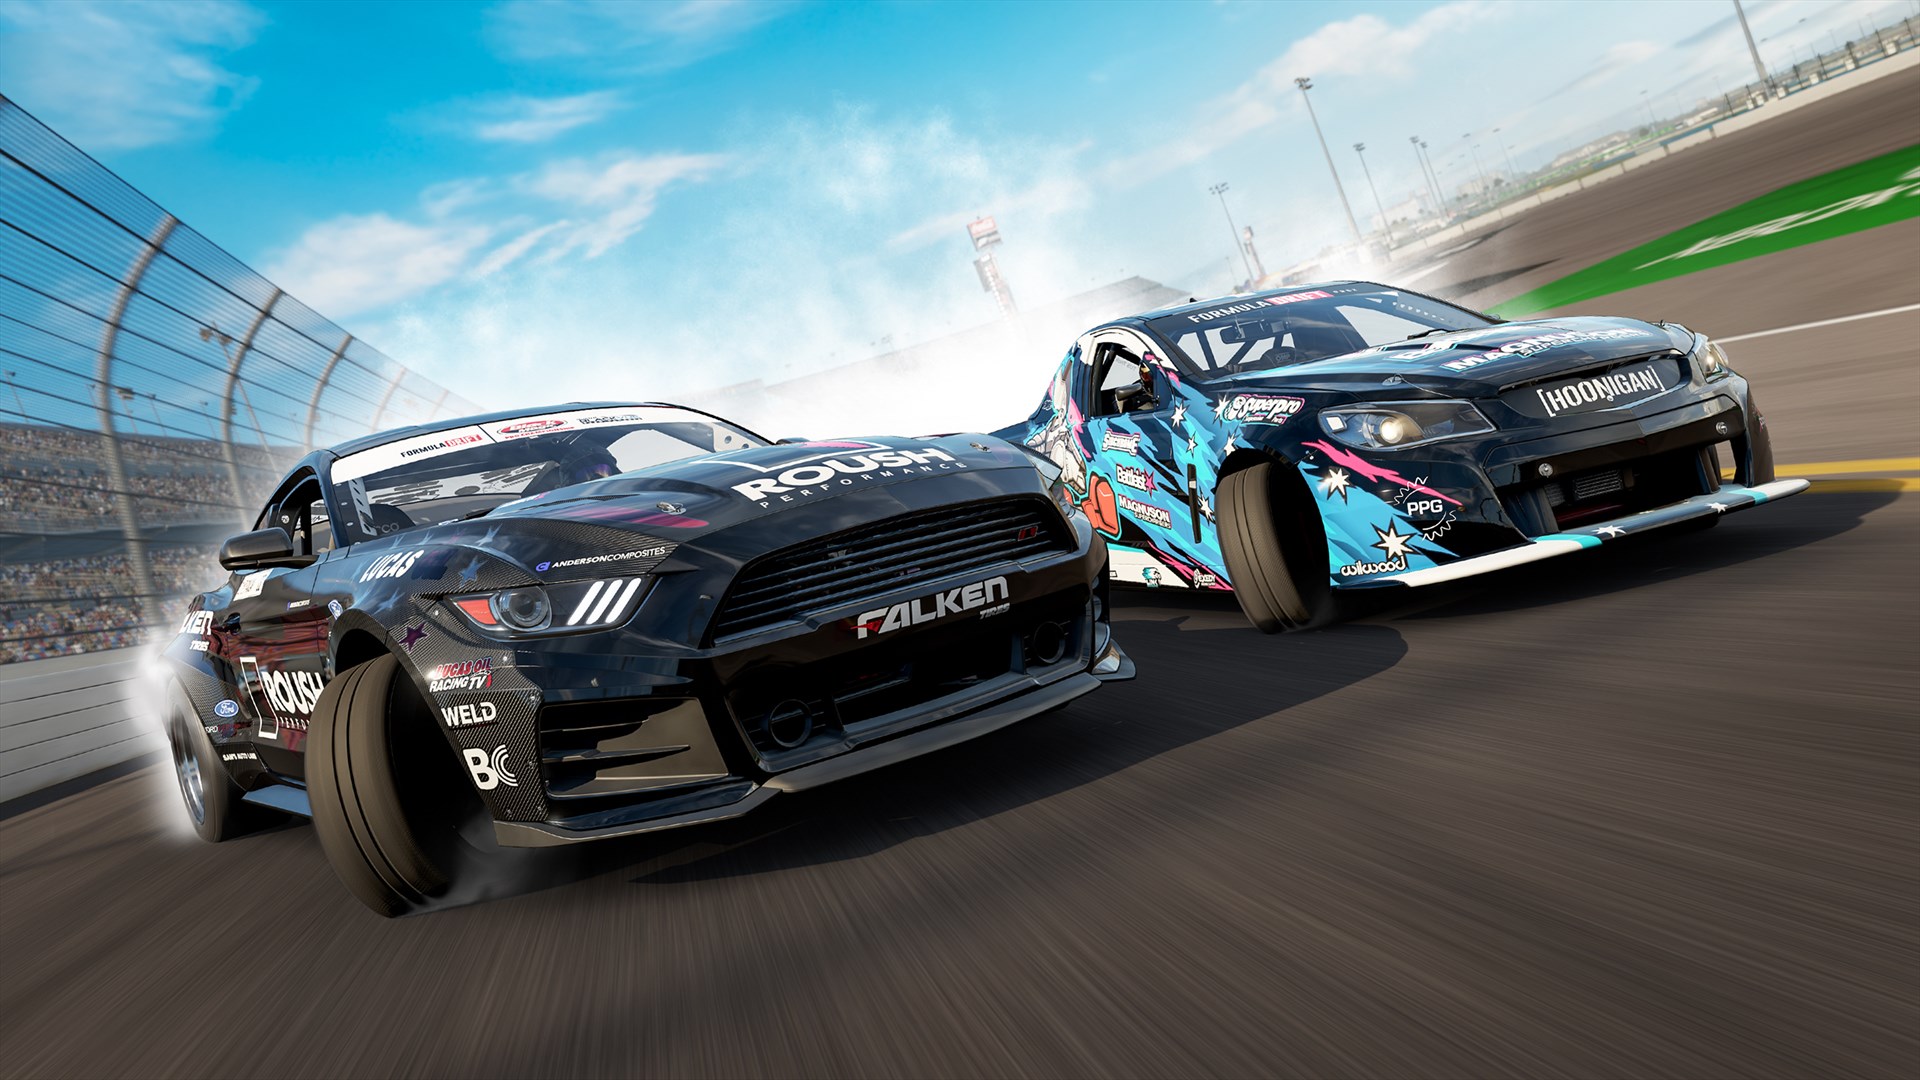 Formula Drift Forza Motorsport 7 カー パック を購入 - Microsoft Store ja-JP - Drifting In Forza Motorsport 7